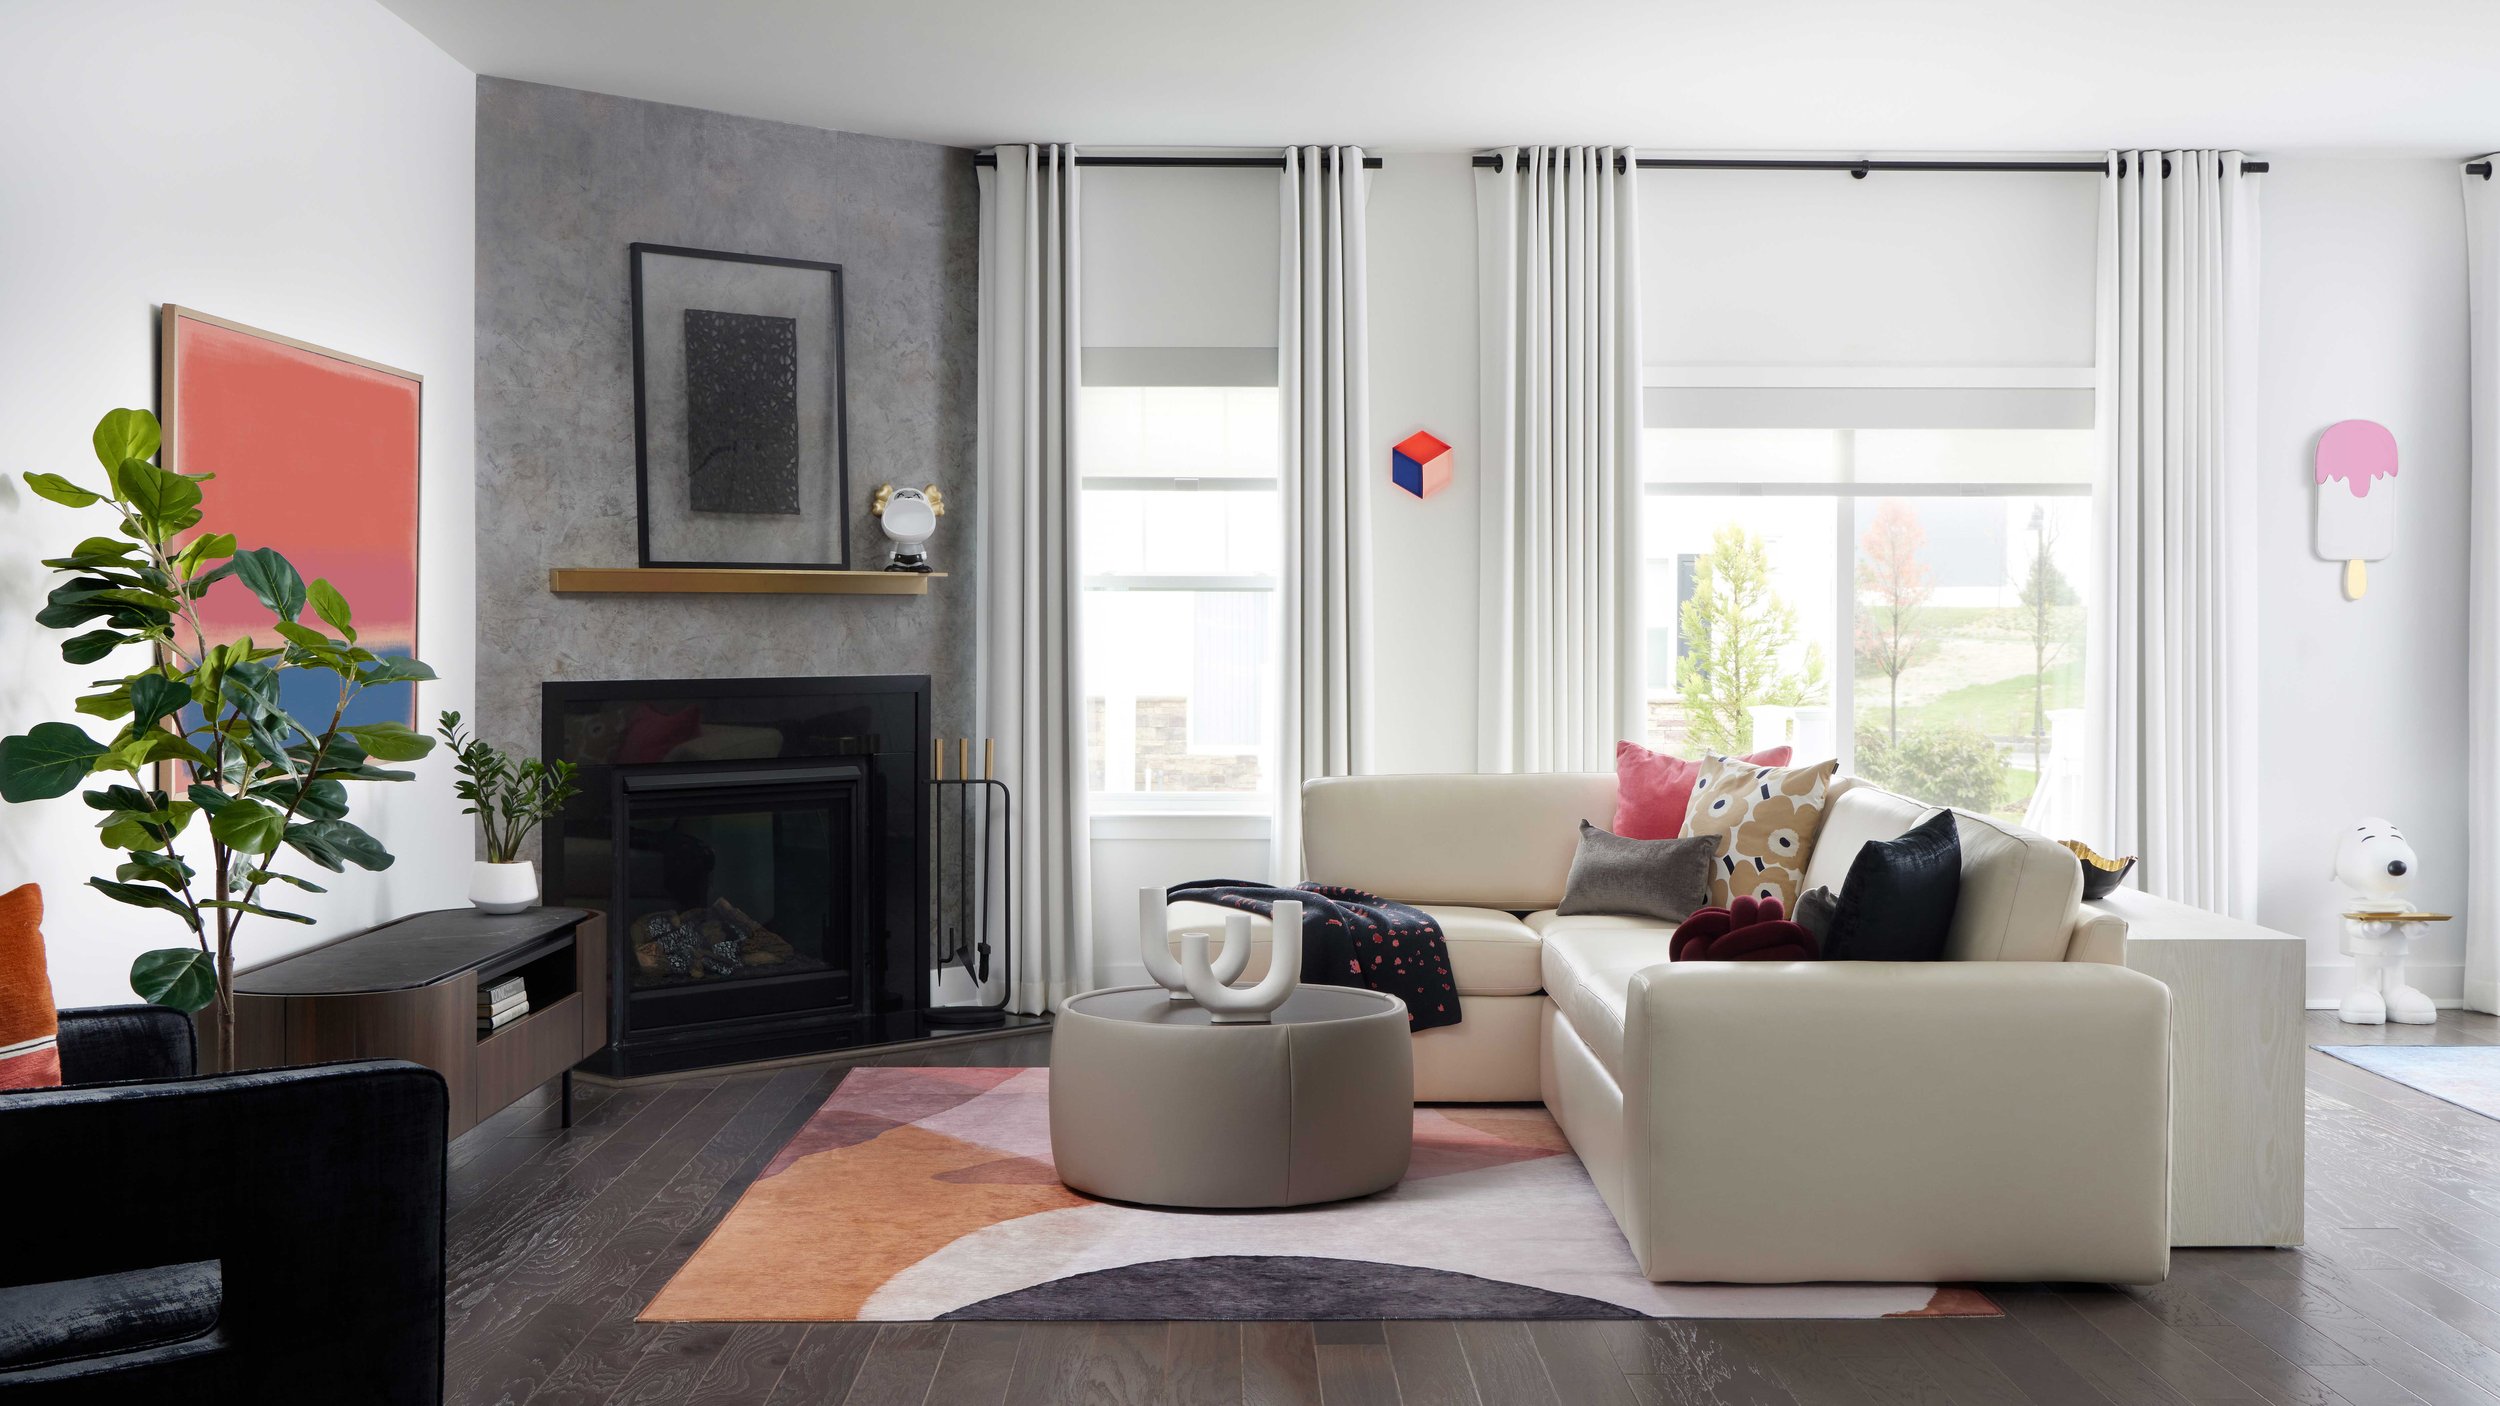 Petra Design - NJ Condo Living room (2).jpg